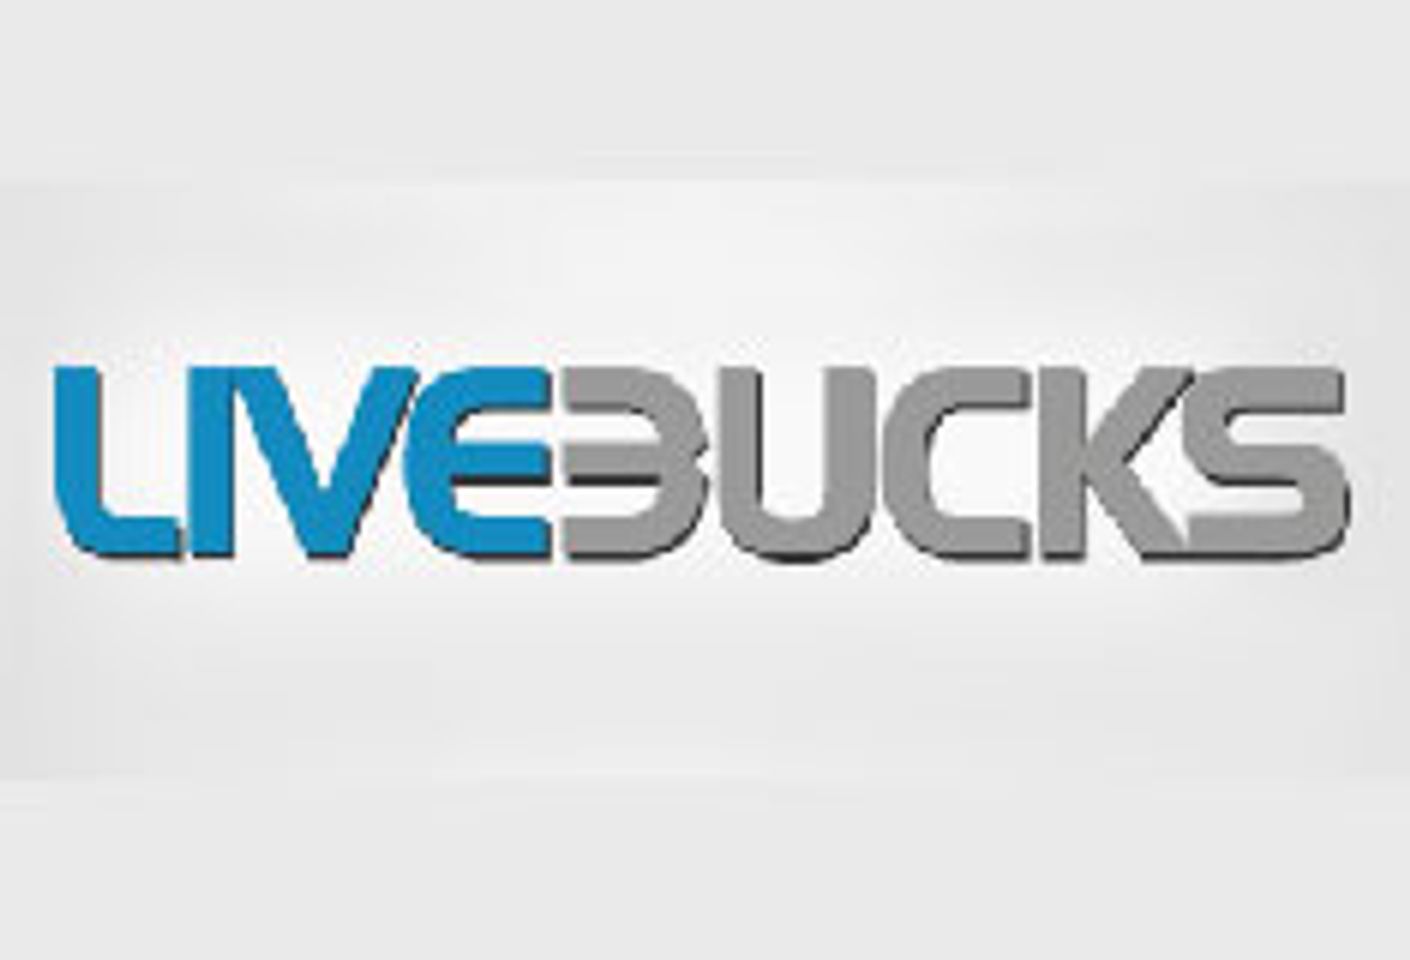 Livebucks.com Announces Halloween Cash Back Promotion